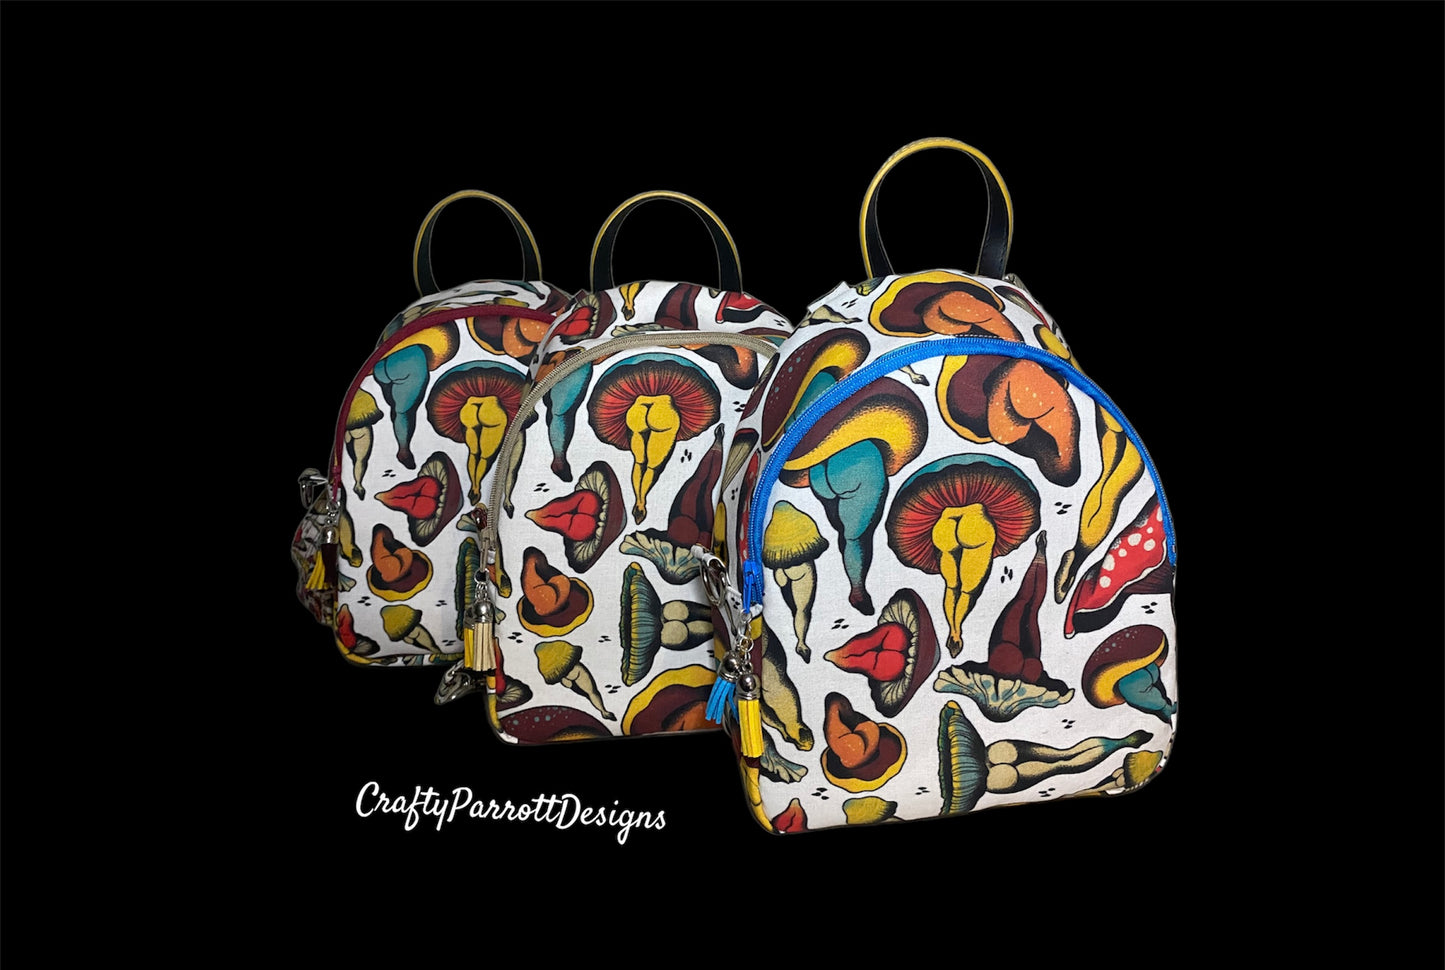 Mushroom Butt/Butterfly & Cactus Butt Mini Backpack purse